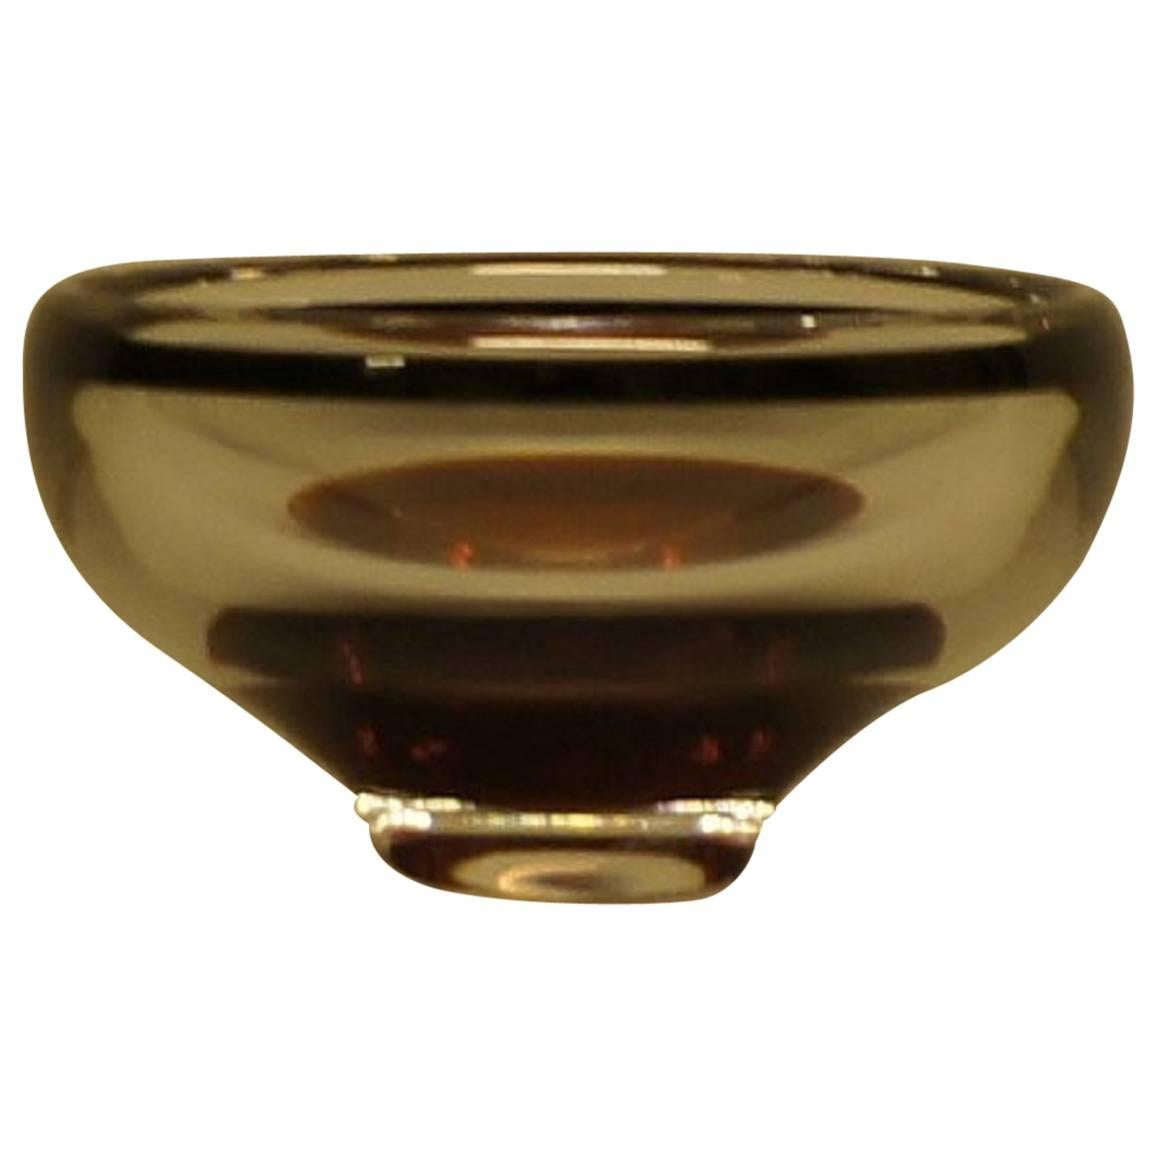 Orrefors Art Glass Bowl with Black Rim and Dark Red Bottom